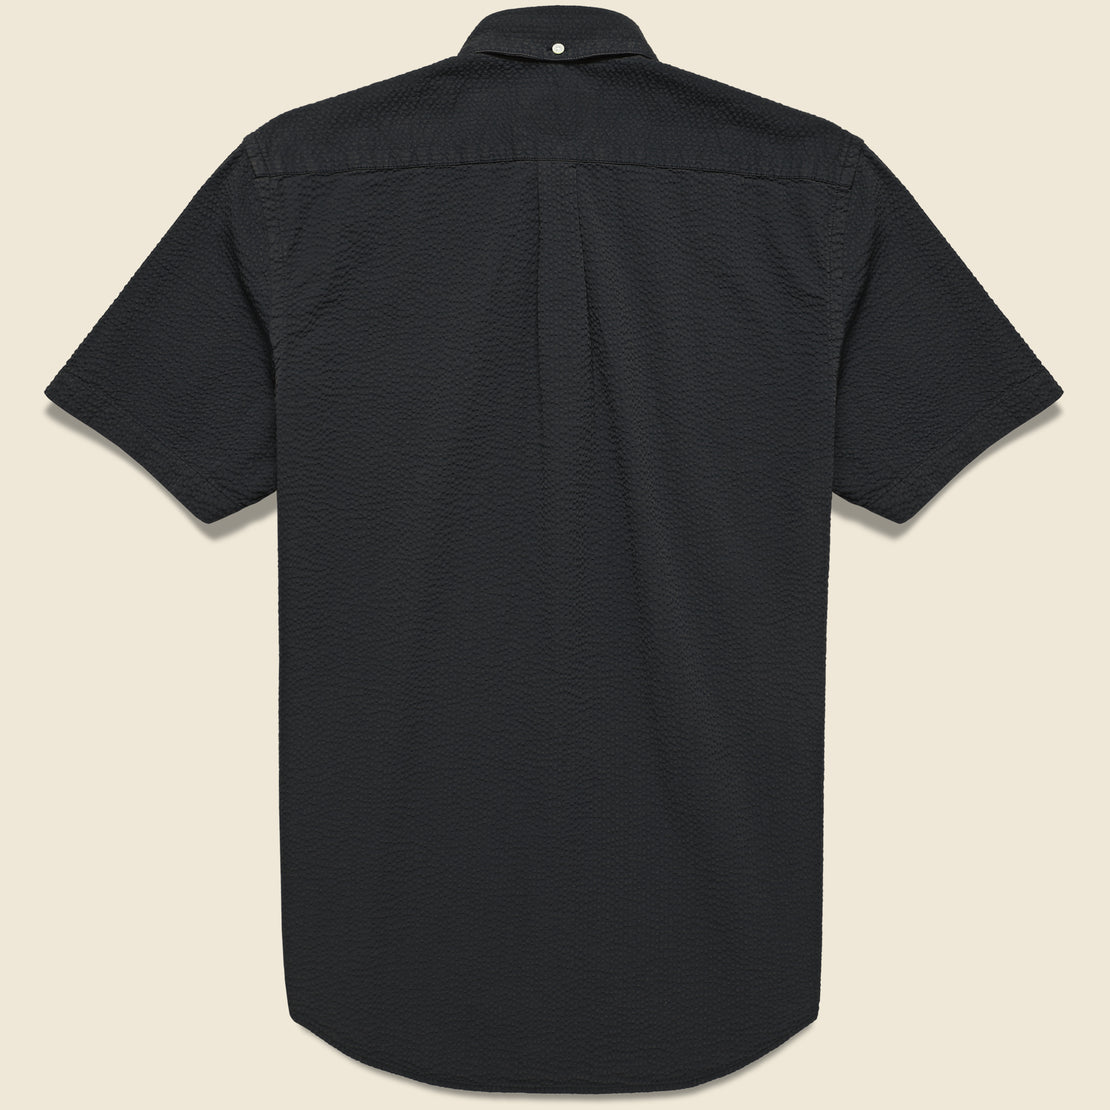 Atlantico Seersucker Shirt - Black - Portuguese Flannel - STAG Provisions - Tops - S/S Woven - Seersucker